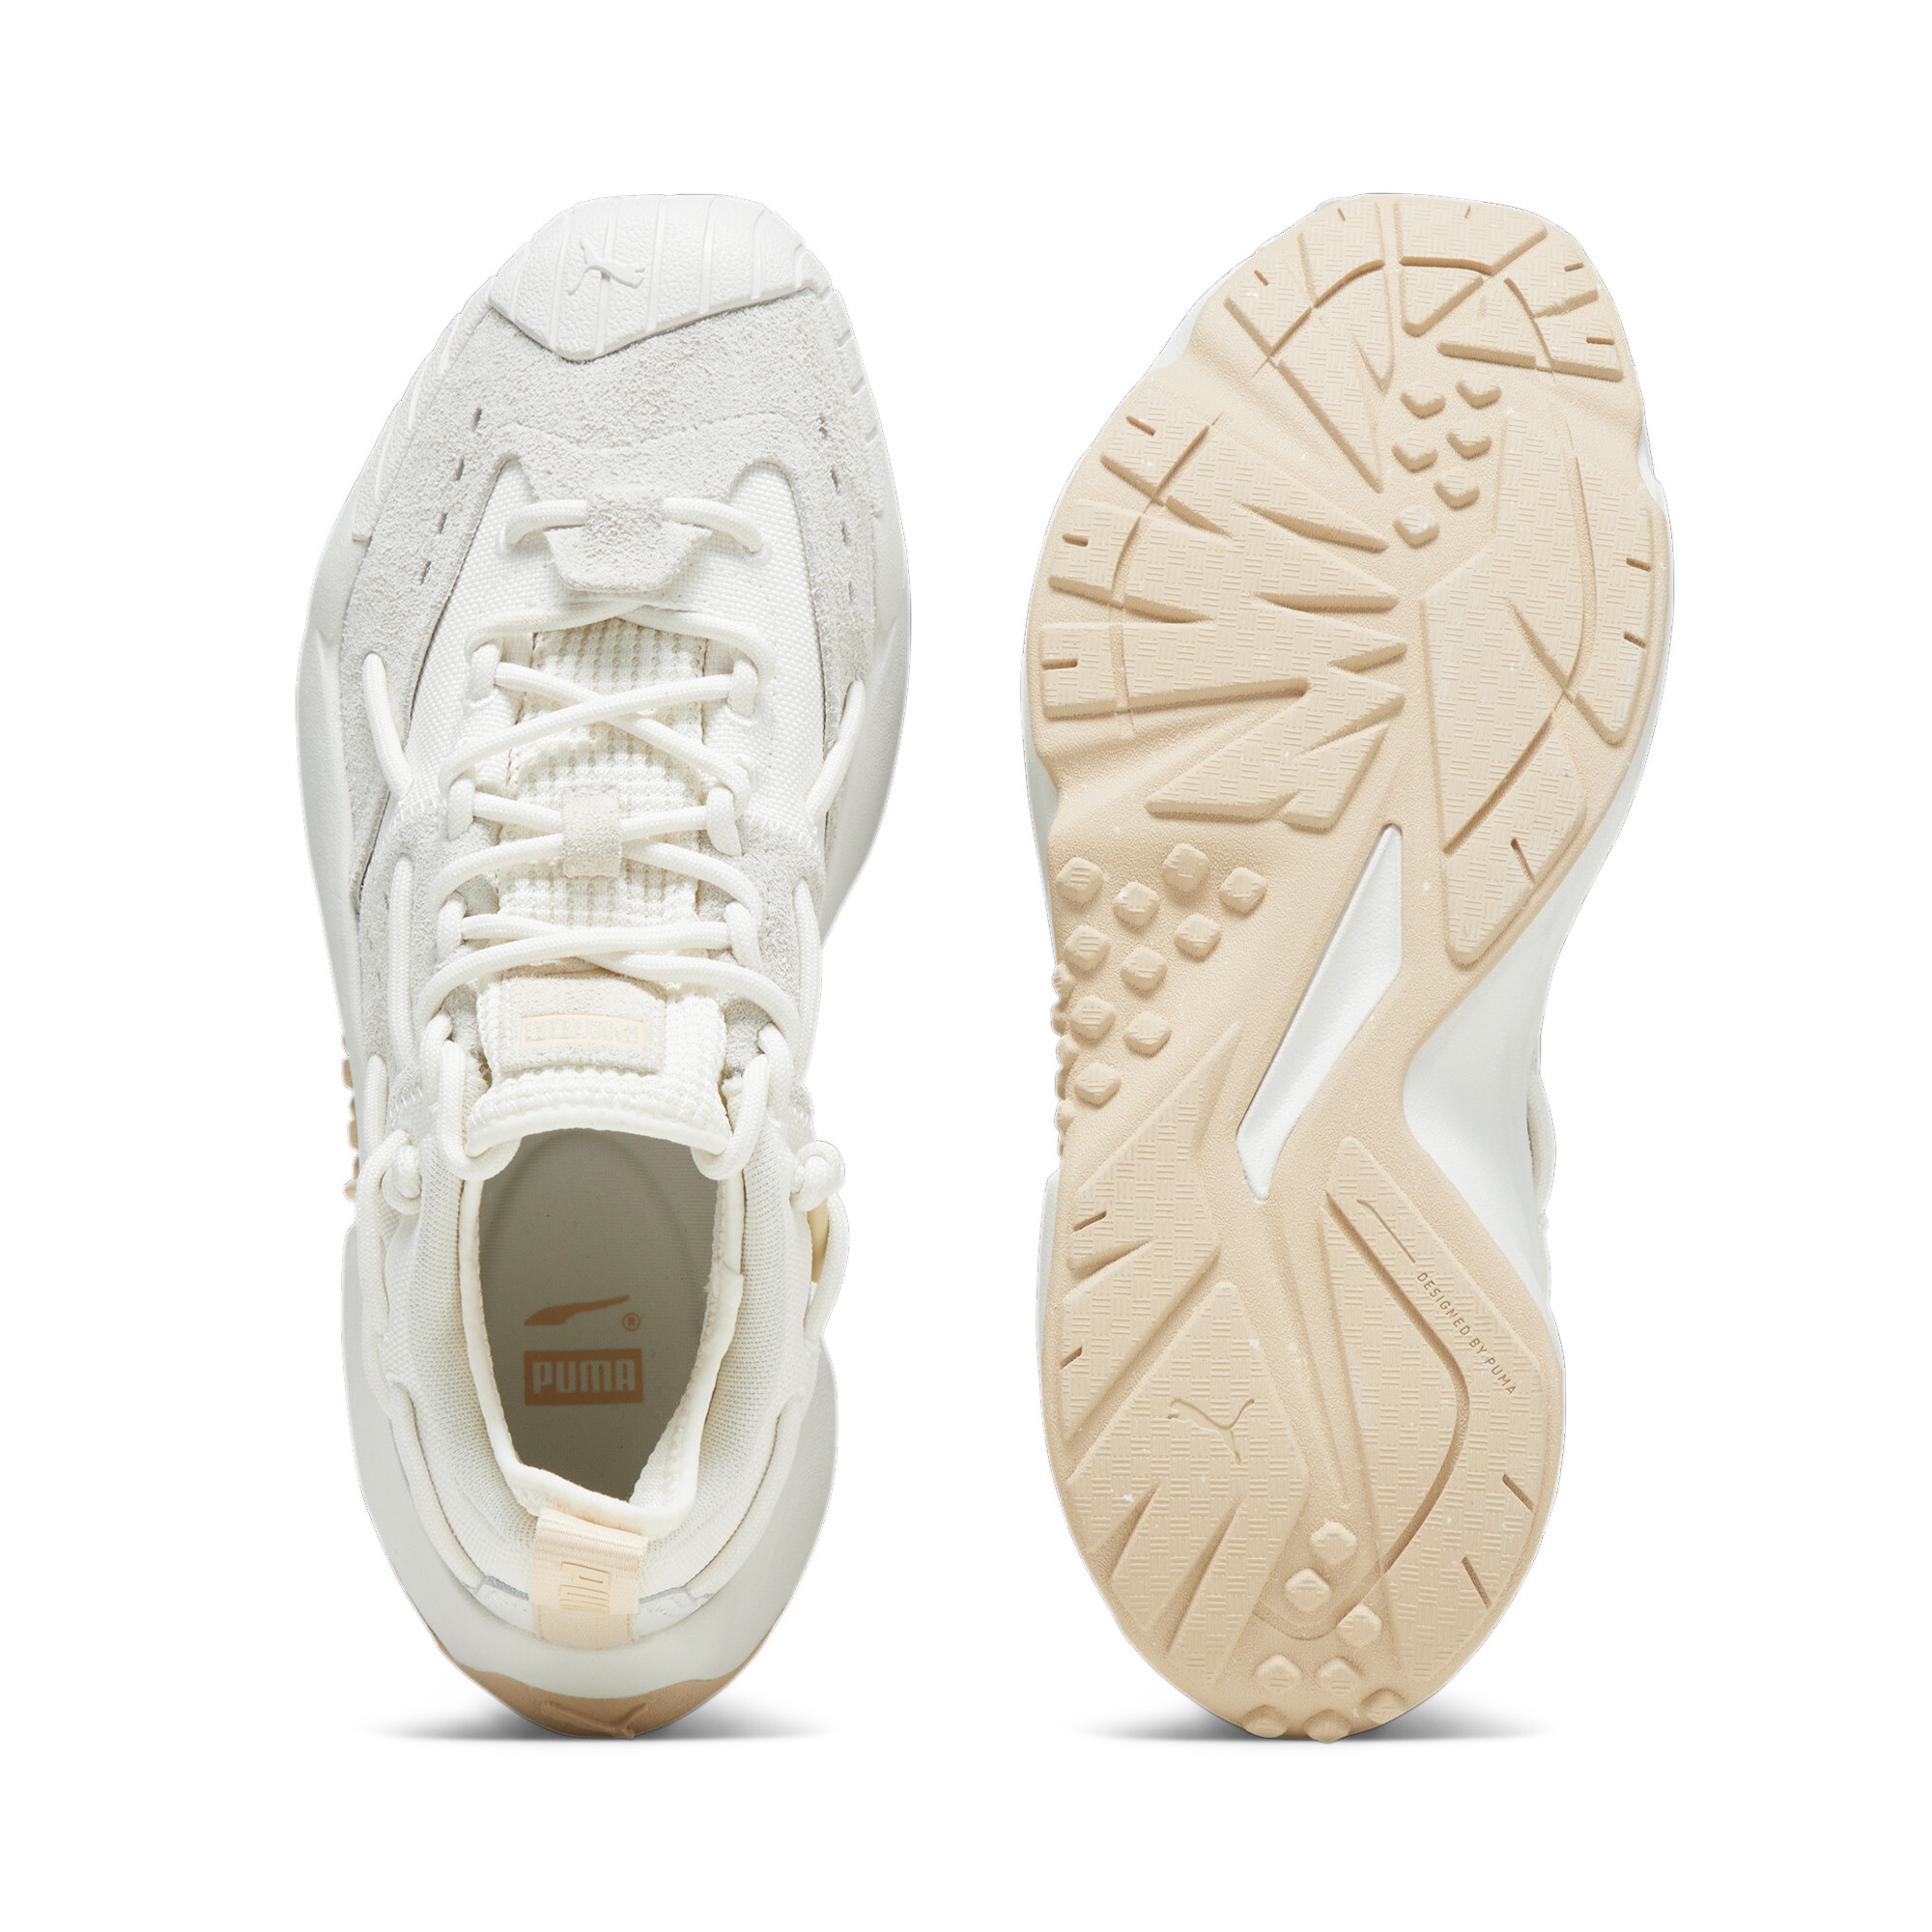 Men's PUMA Plexus Sand Sneakers In White, Size EU 37.5